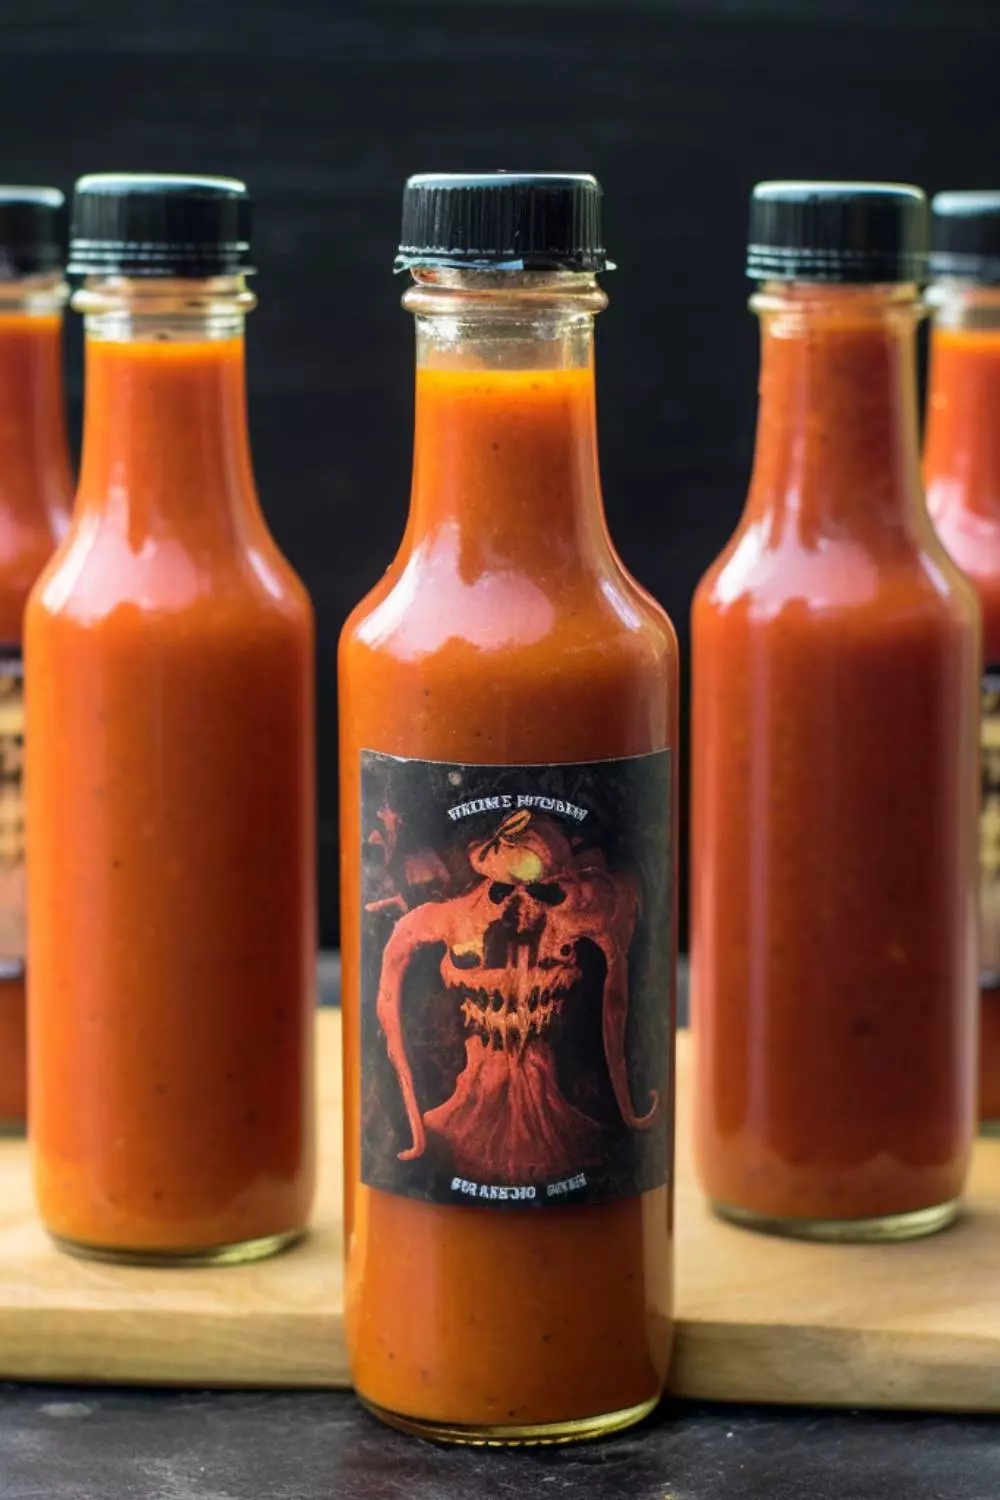 Carolina Reaper Hot Sauce